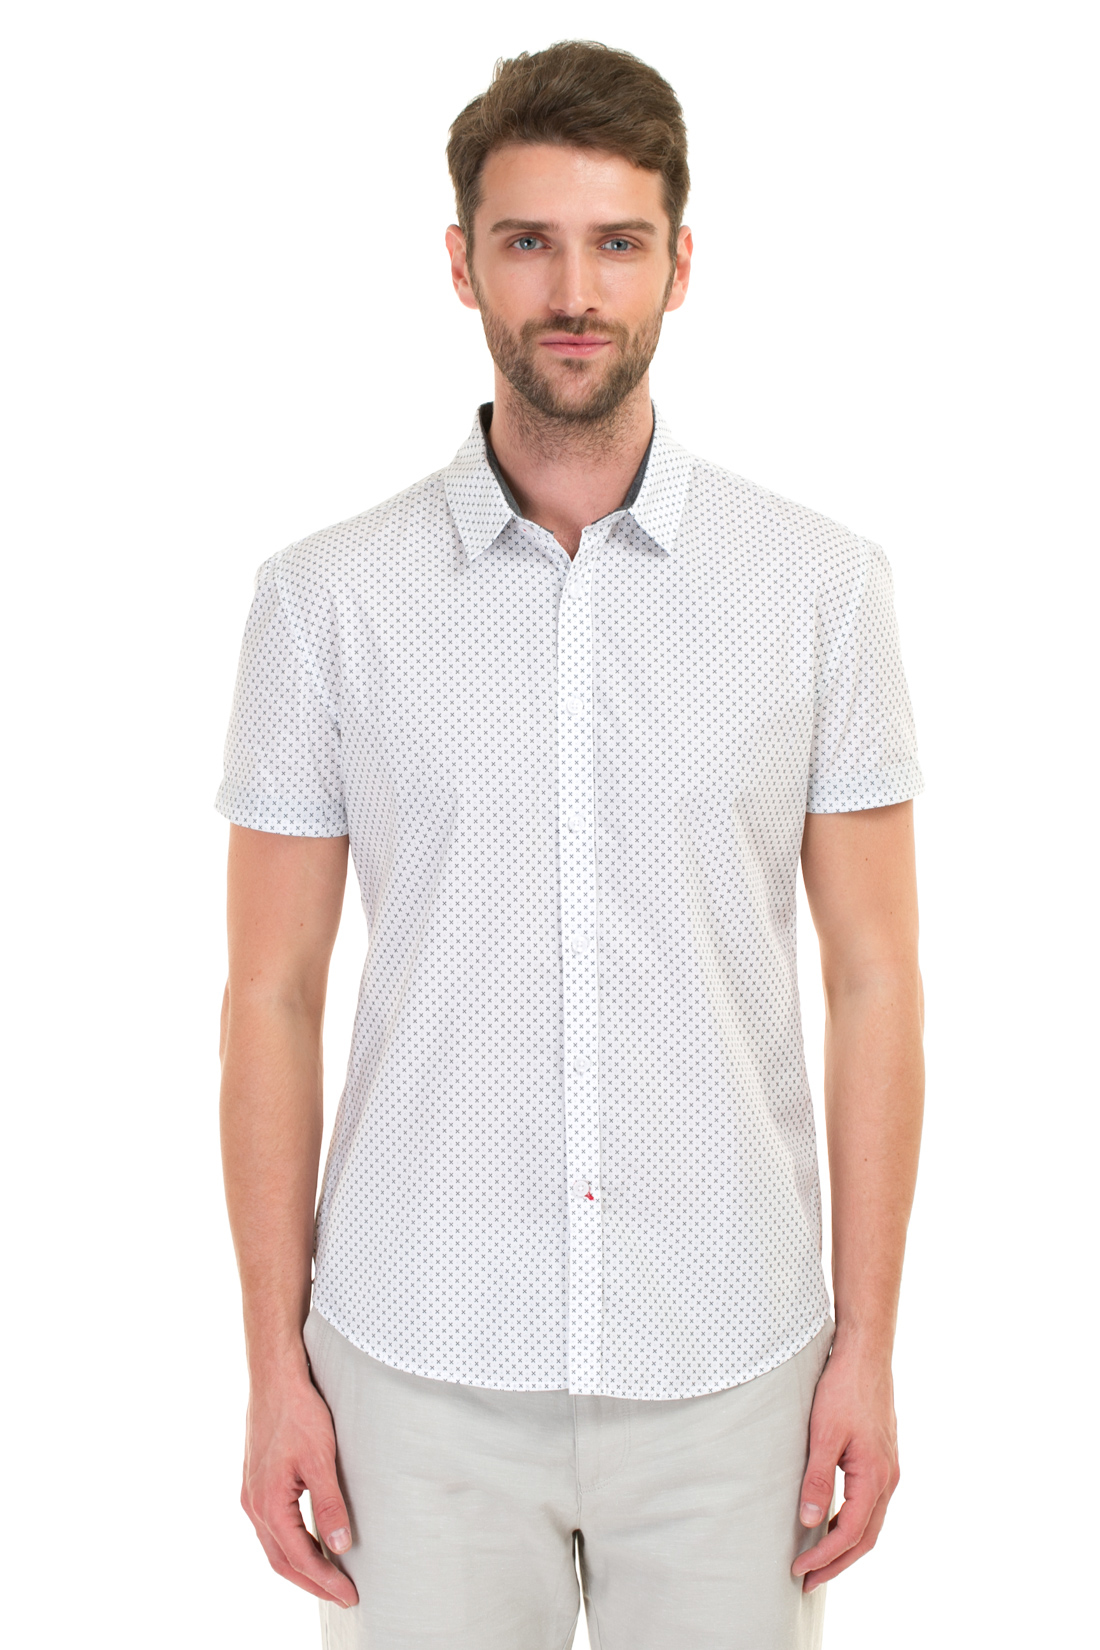 Рубашка с коротким рукавом с орнаментом (арт. baon B687003), размер 3XL, цвет white printed#белый